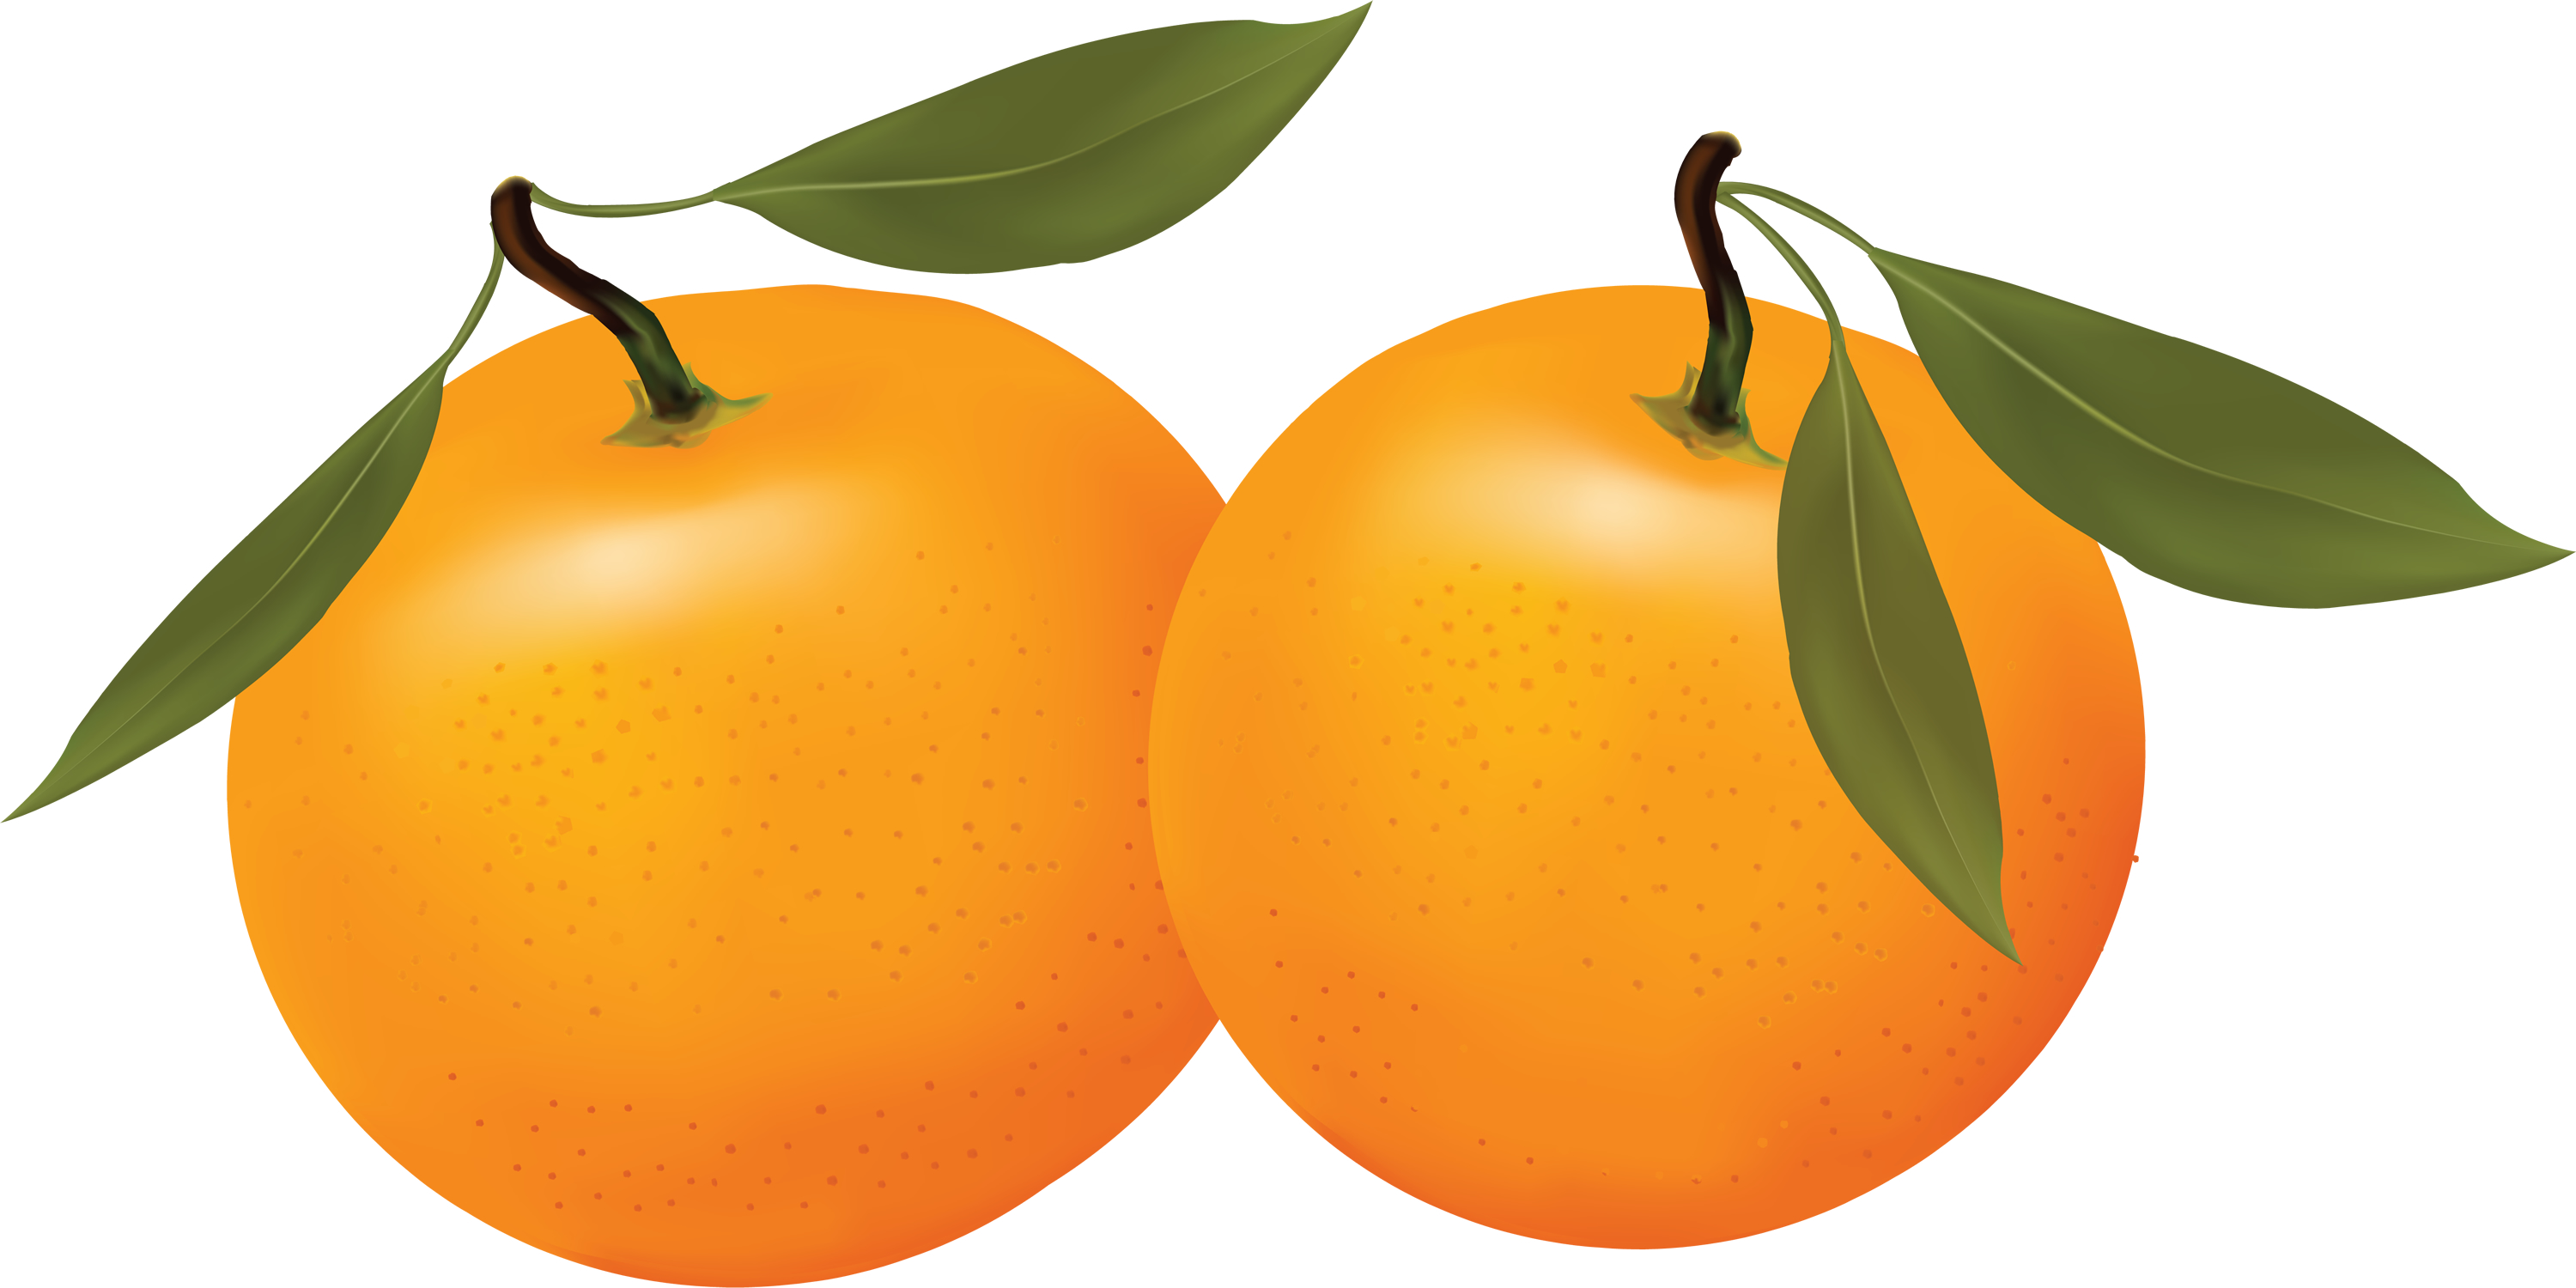 Oranges clipart. Free orange cliparts download